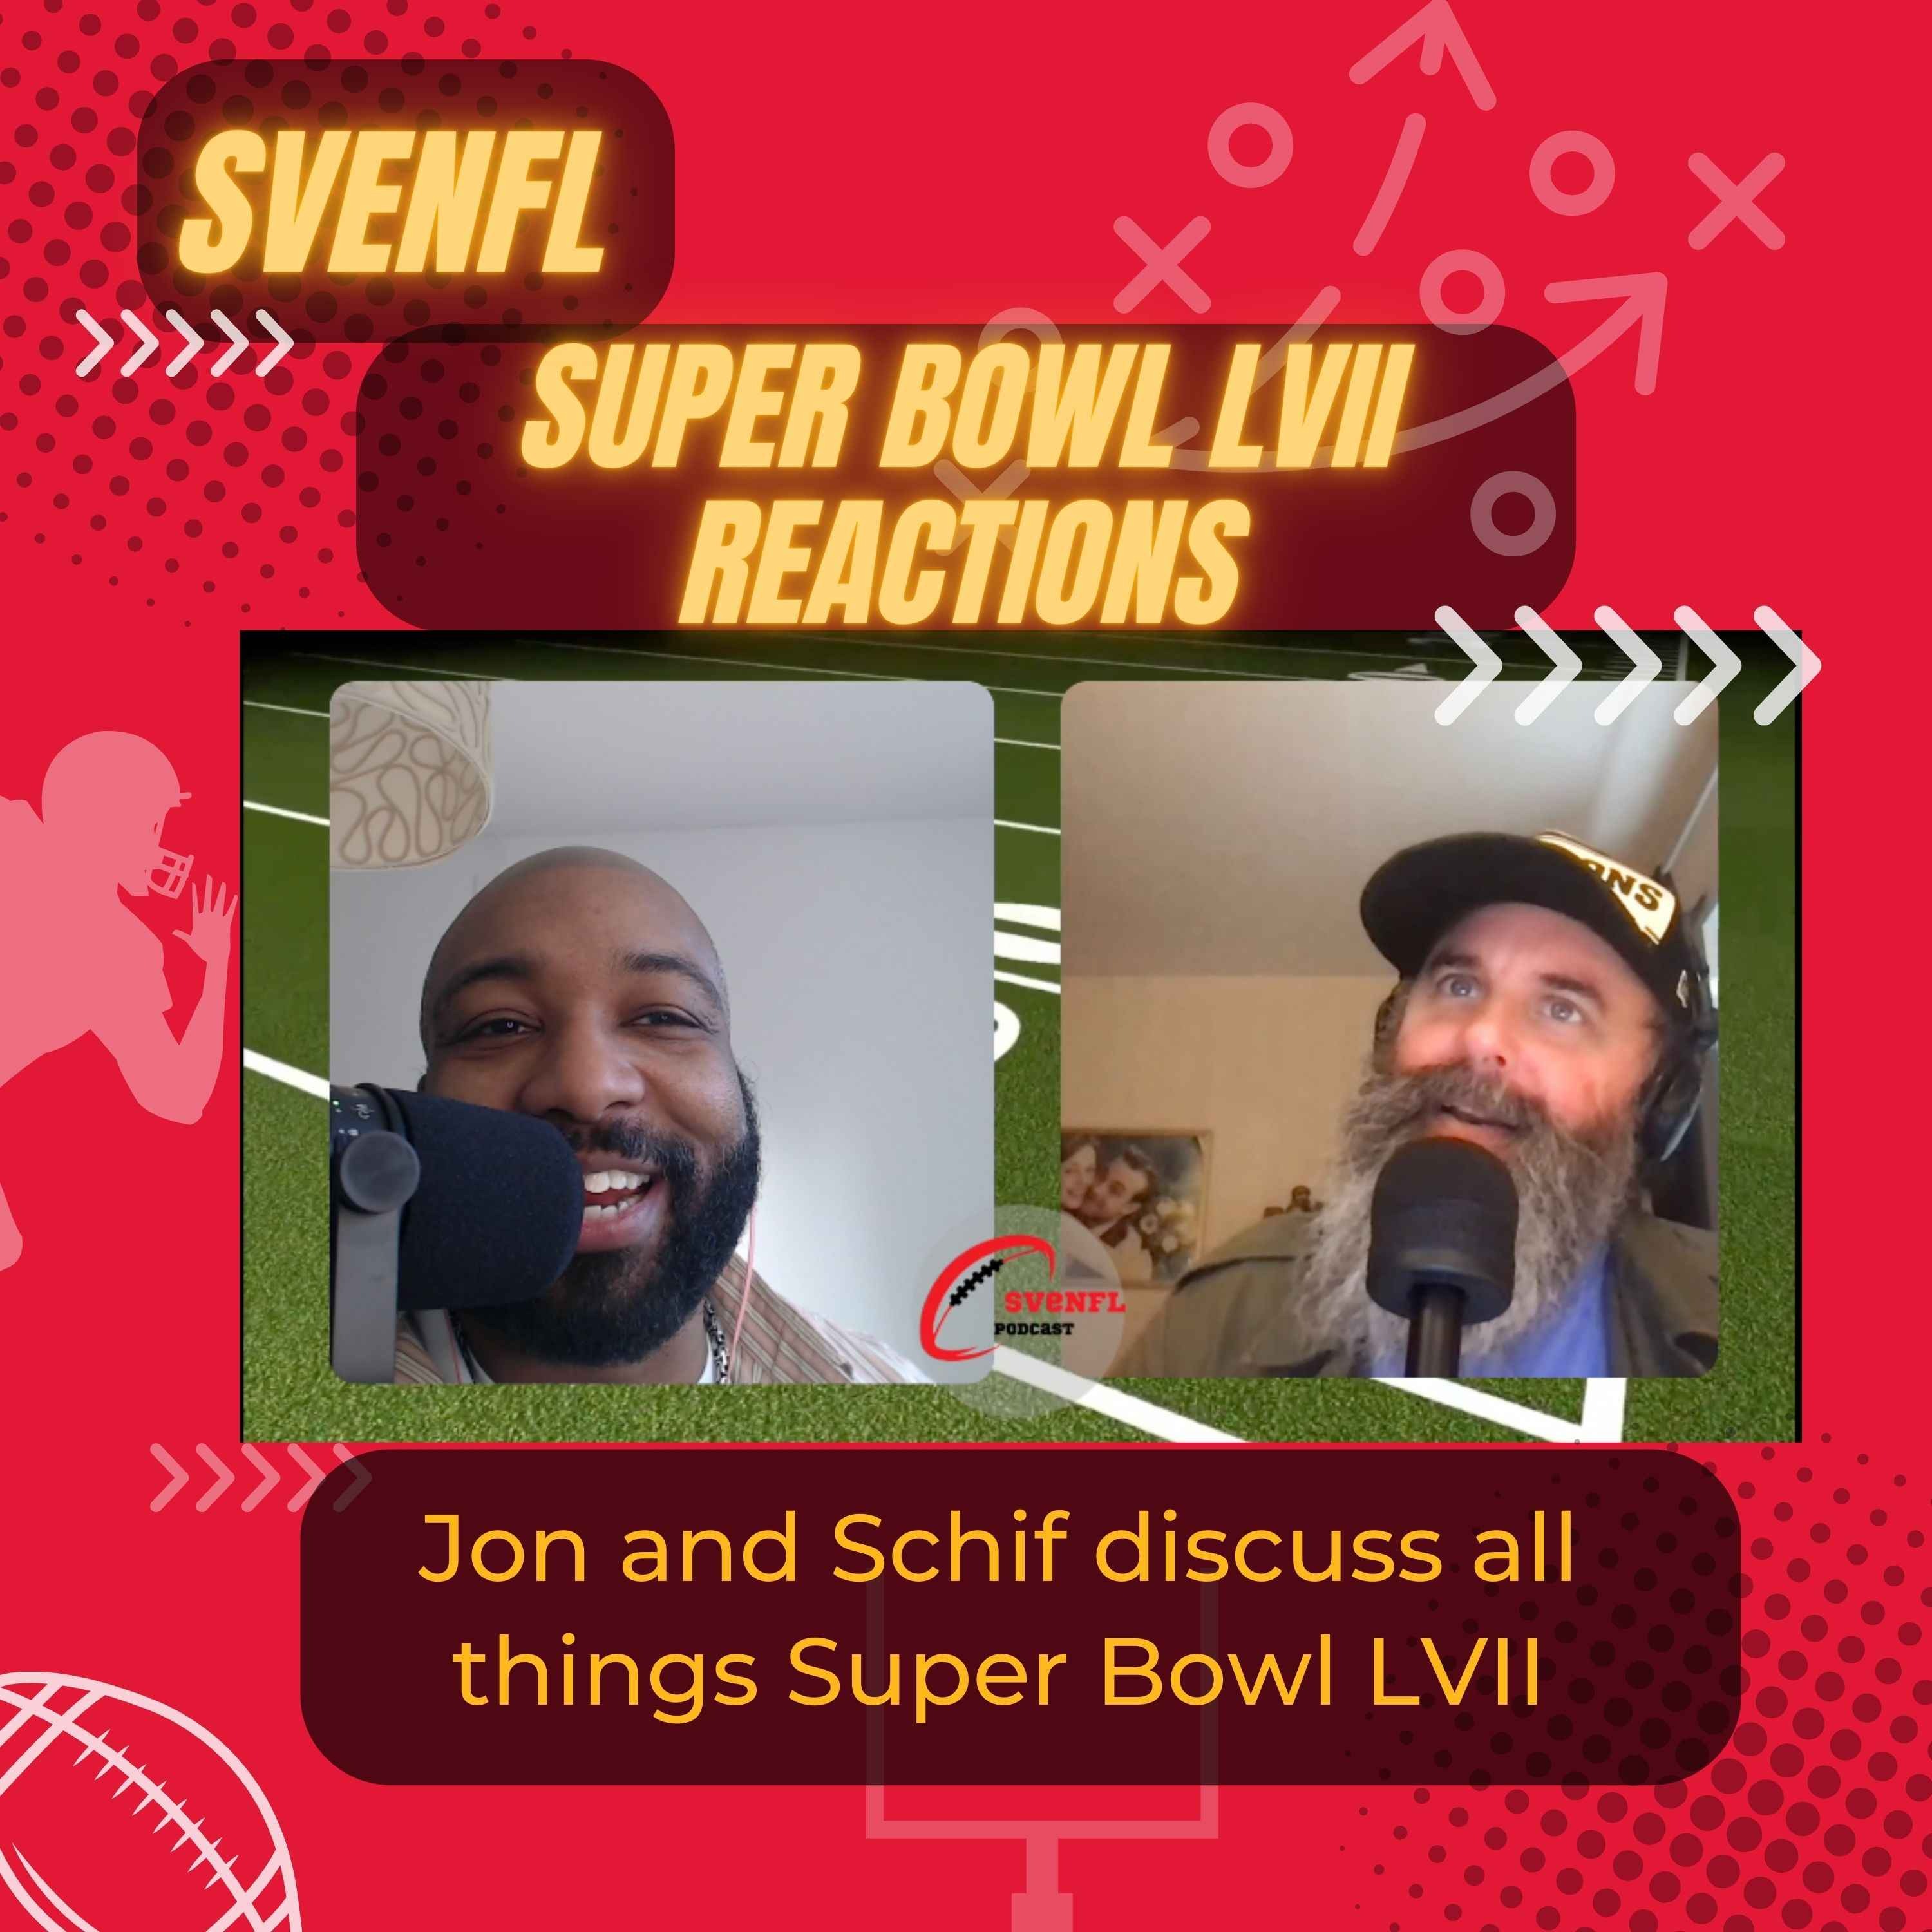 SveNFL Super Bowl LVII Reactions